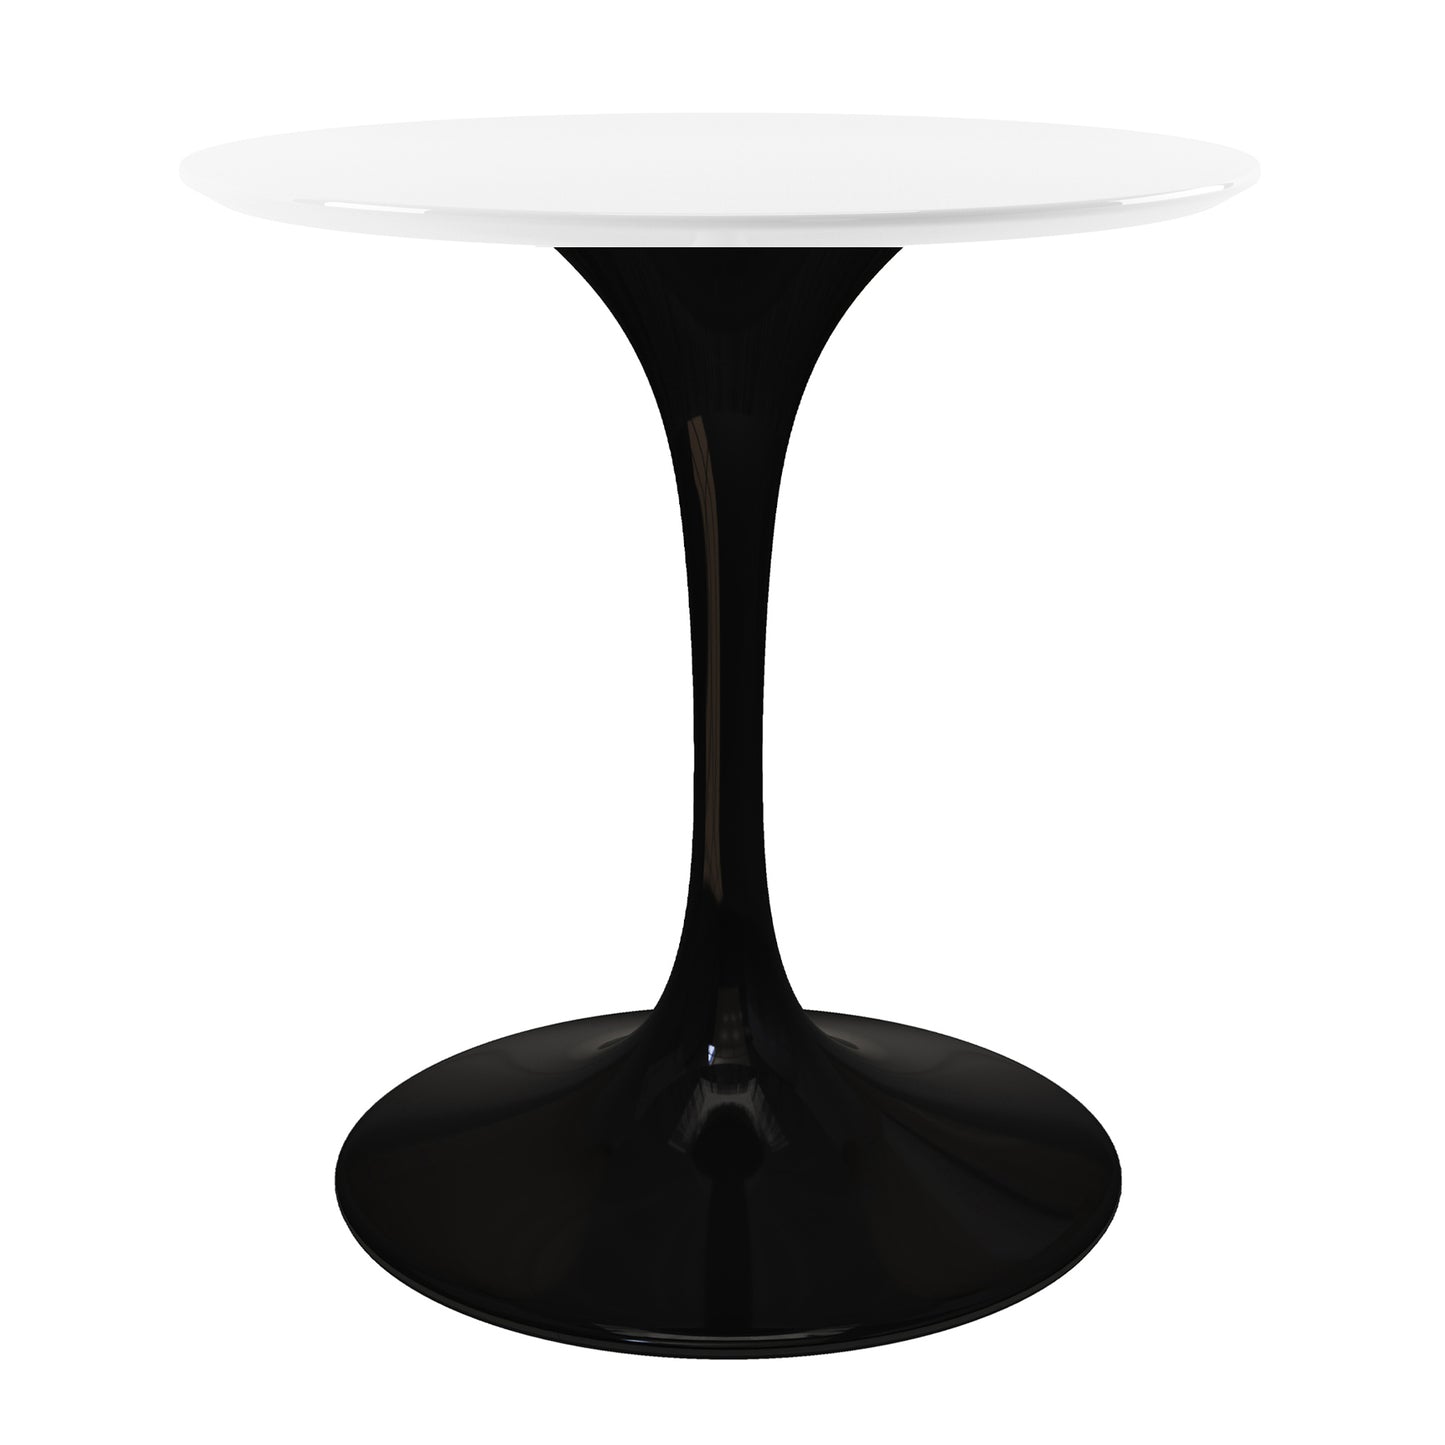 Rose 32" Round Fiberglass Dining Table, Black Base